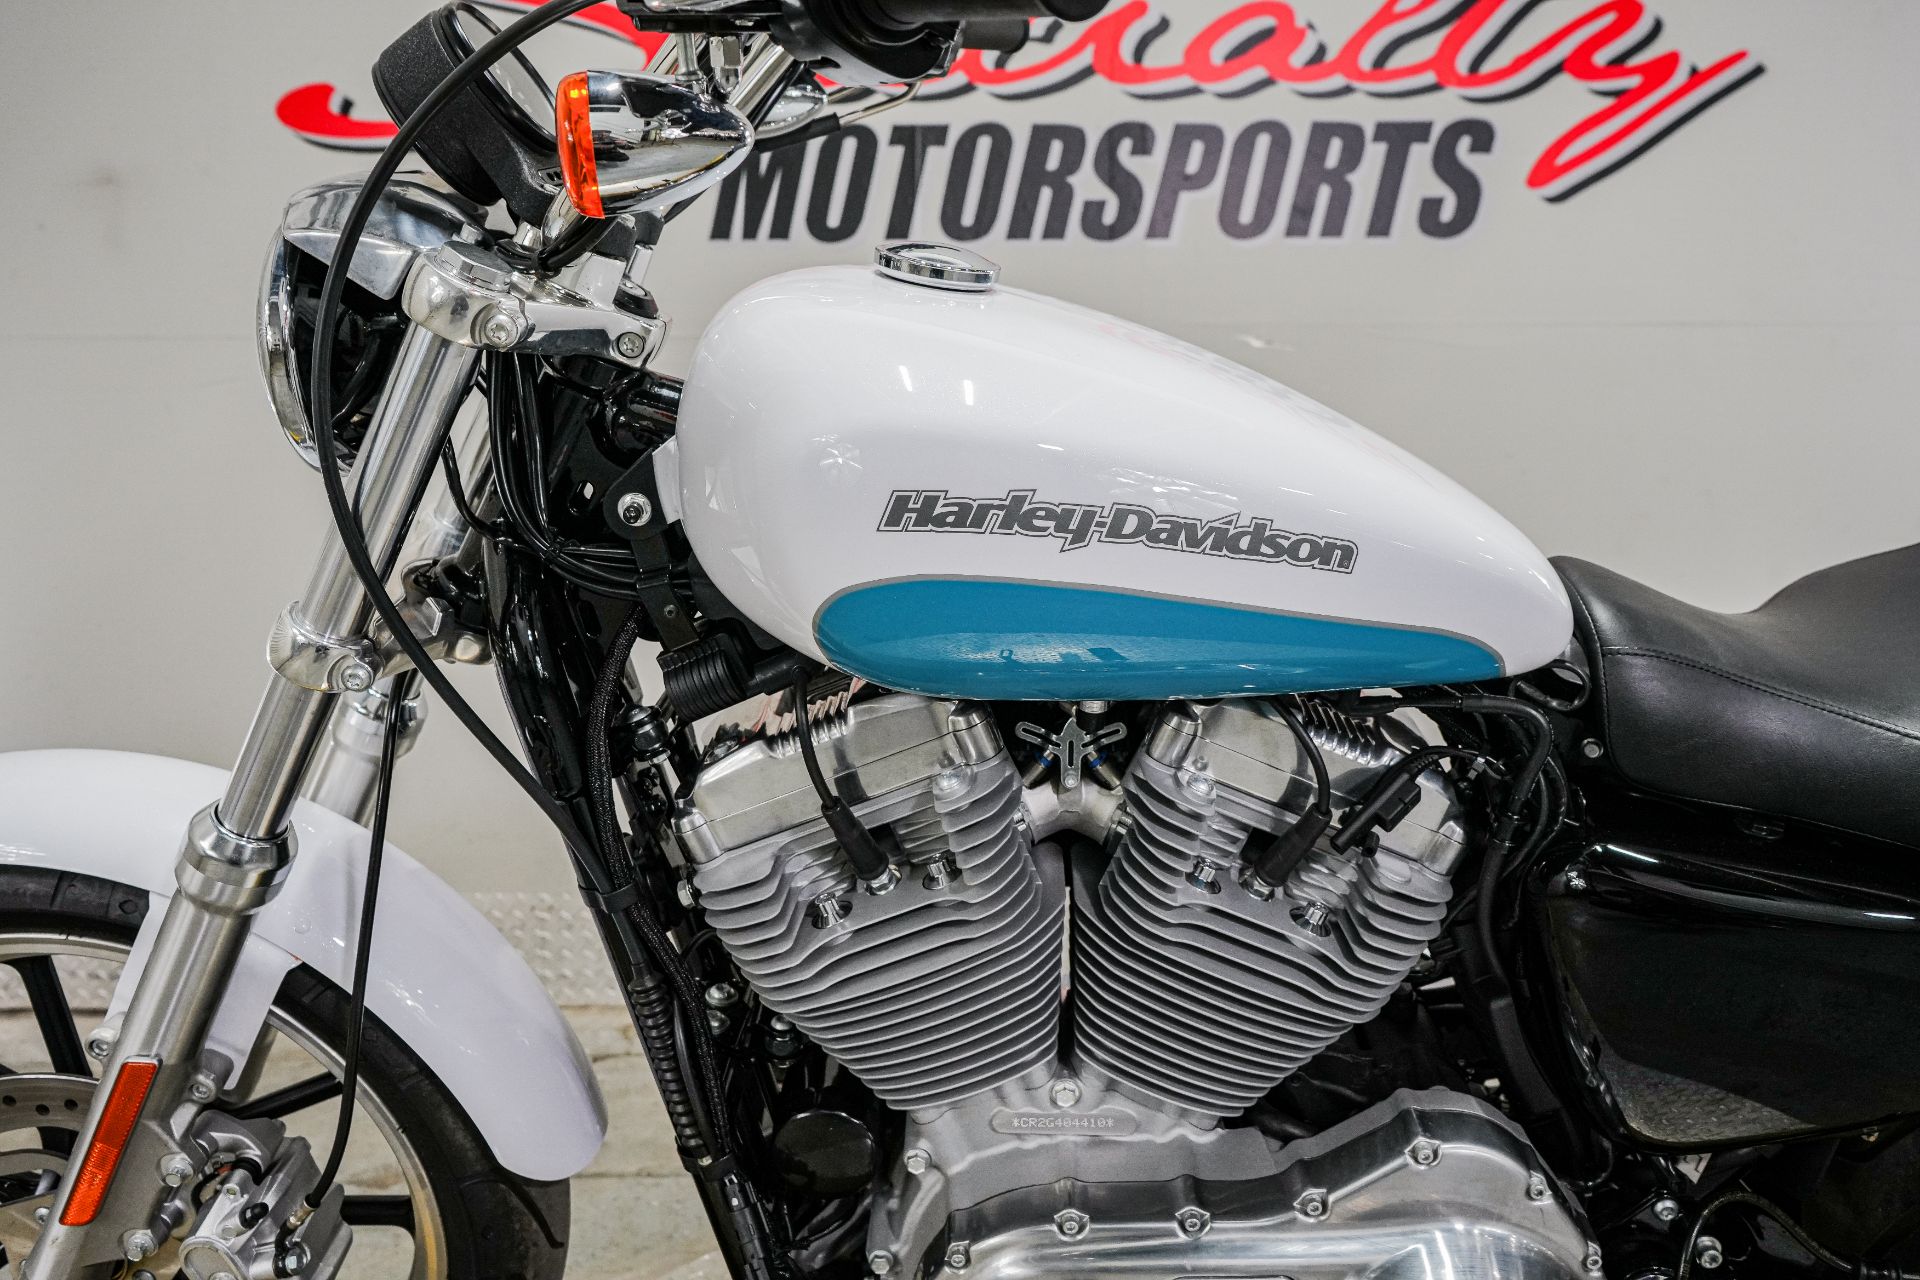 2016 Harley-Davidson SuperLow® in Sacramento, California - Photo 5